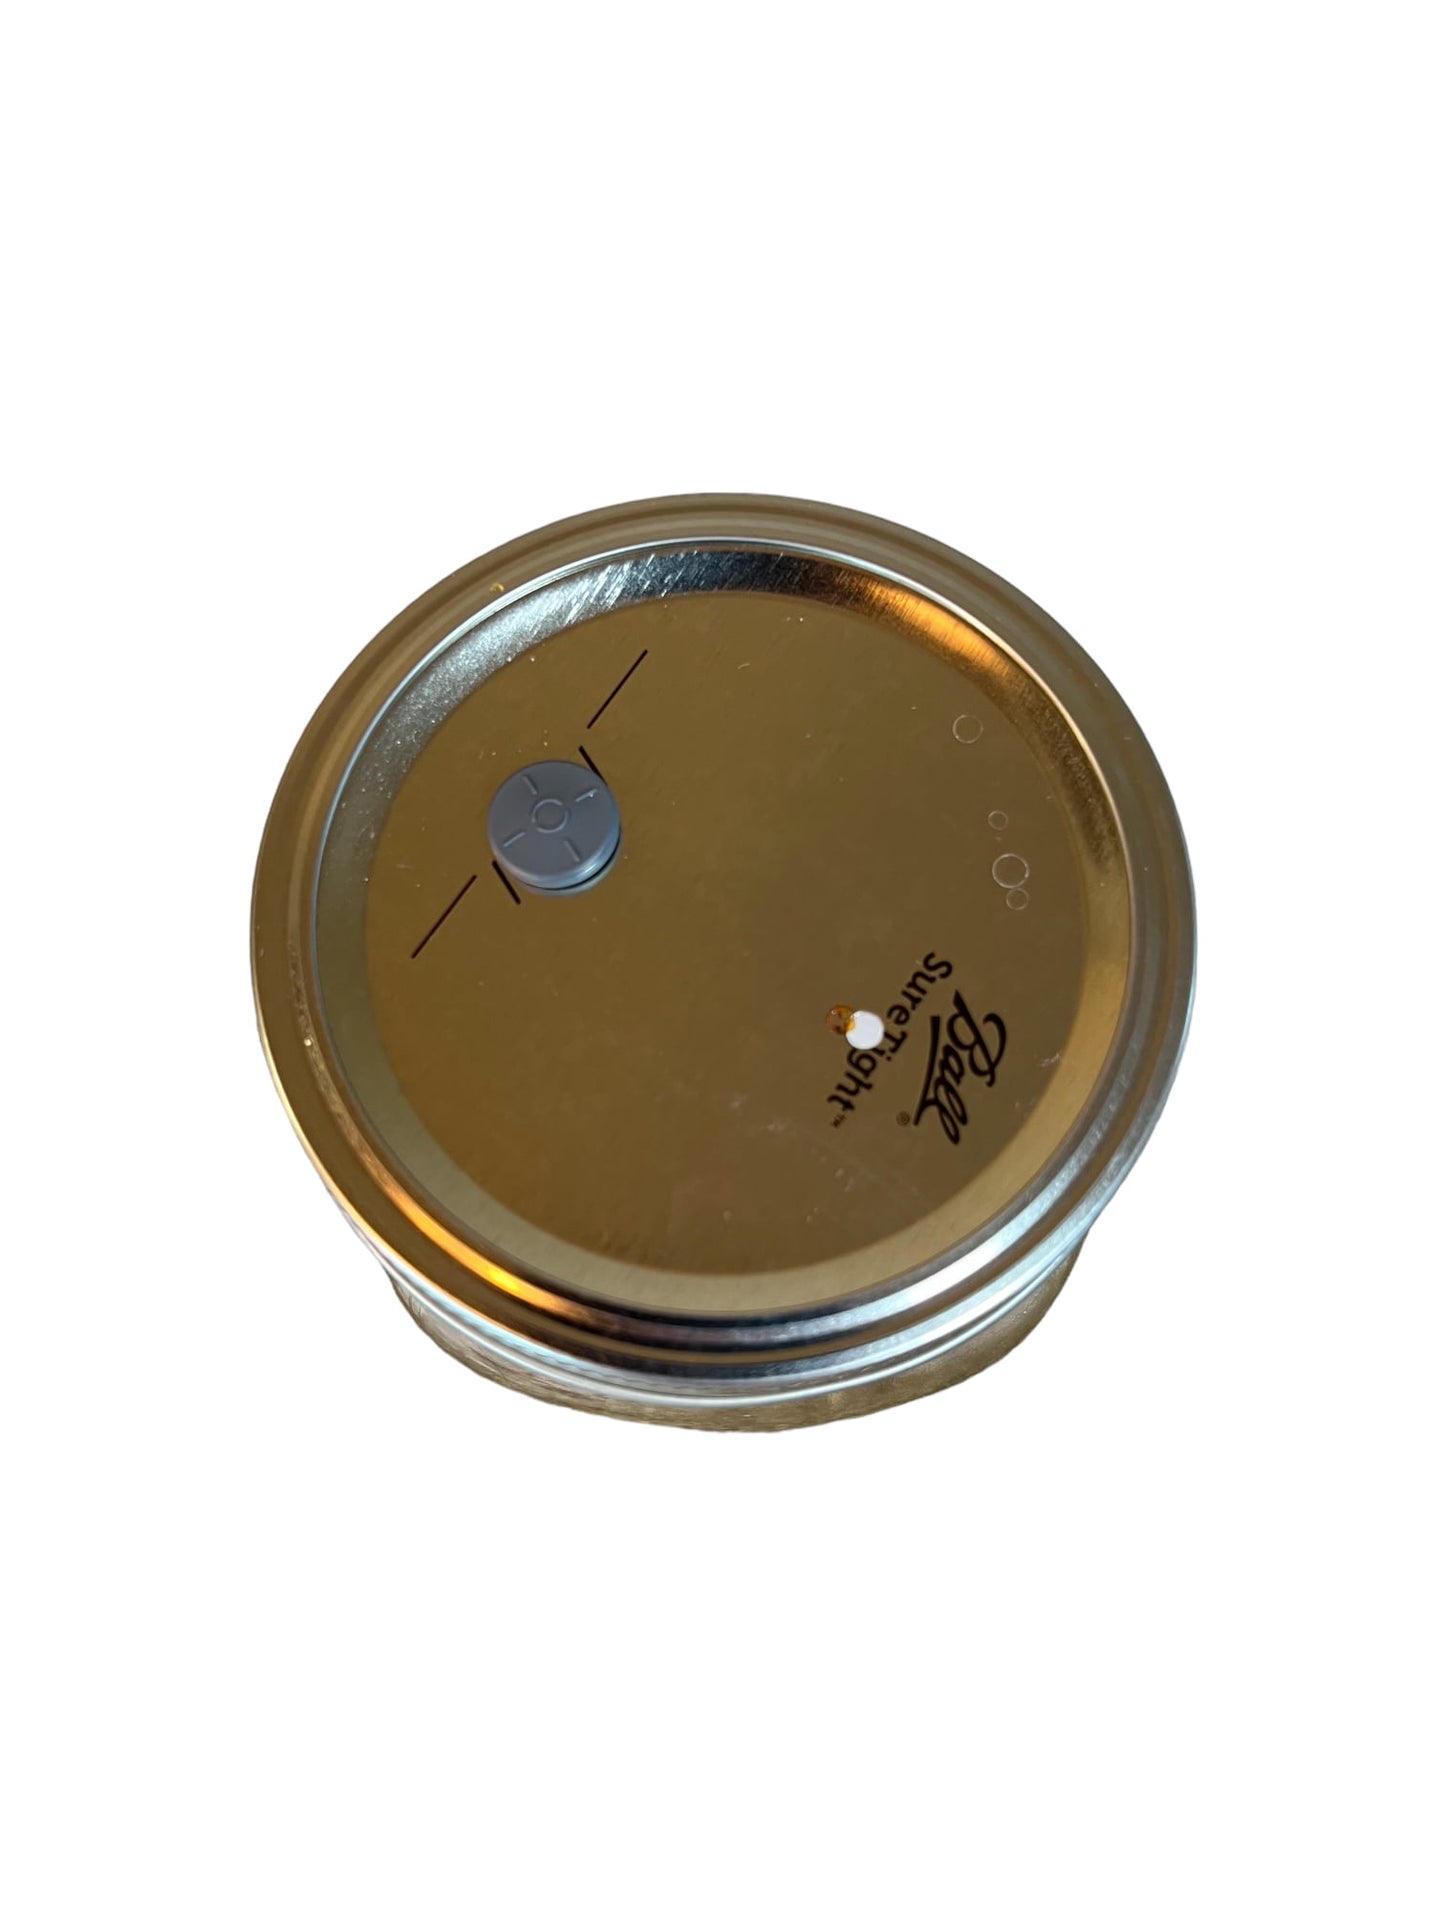 Sterilized Golden Rye Grain Jar